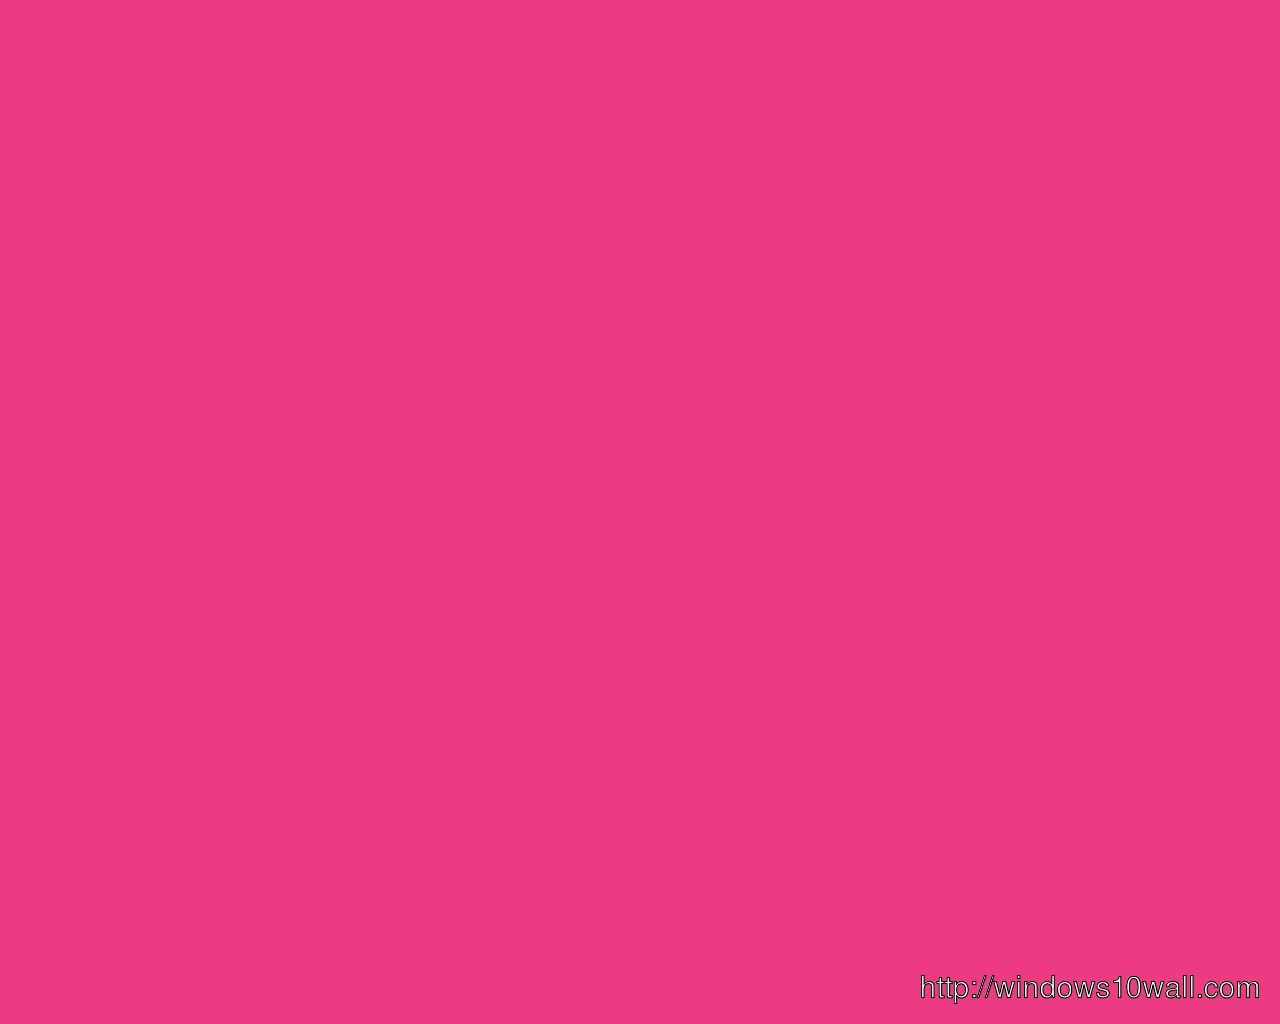 Cerise Pink Solid Background Wallpaper